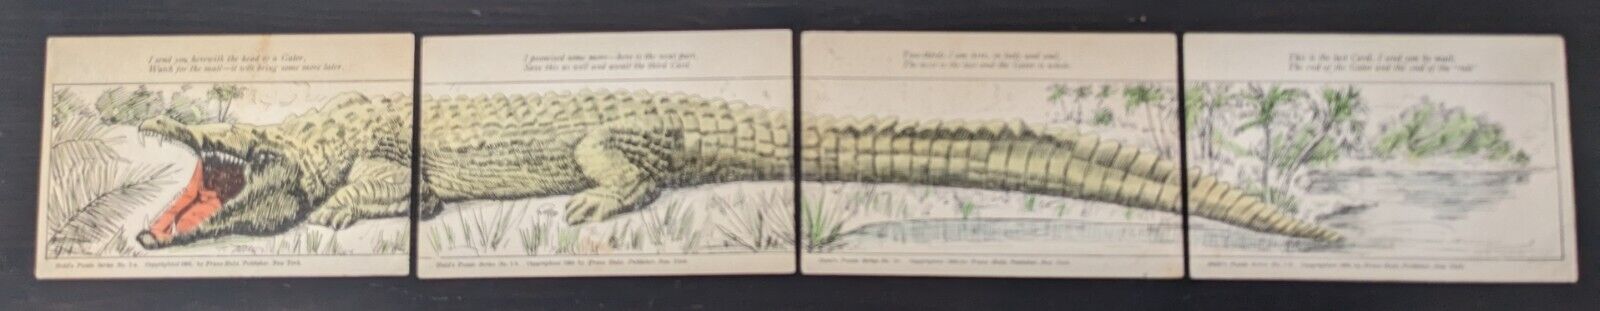 Alligator 4-Piece Postcard Set Complete Huld's Puzzle Series 1a, 1b, 1c, 1d